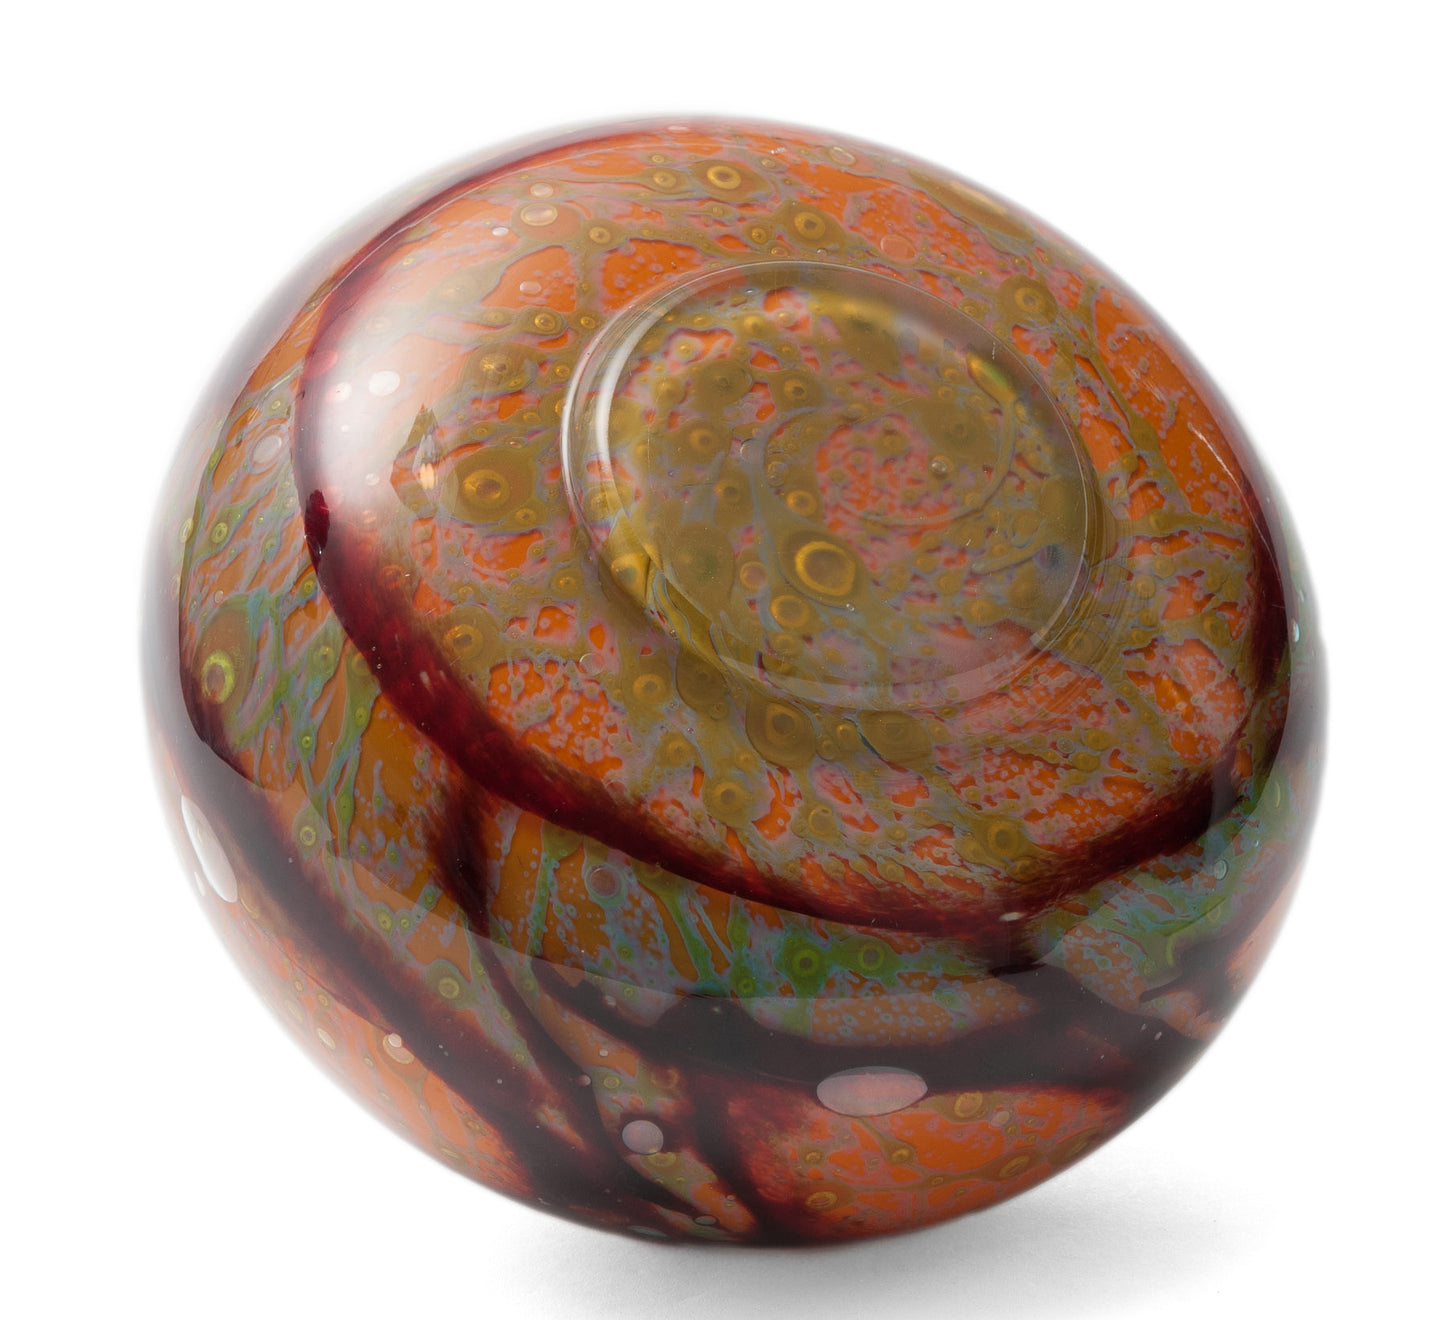 WMF Ikora Art Glass Vase / Lamp Base Large Size Vintage in Orange and Burgundy (0712)